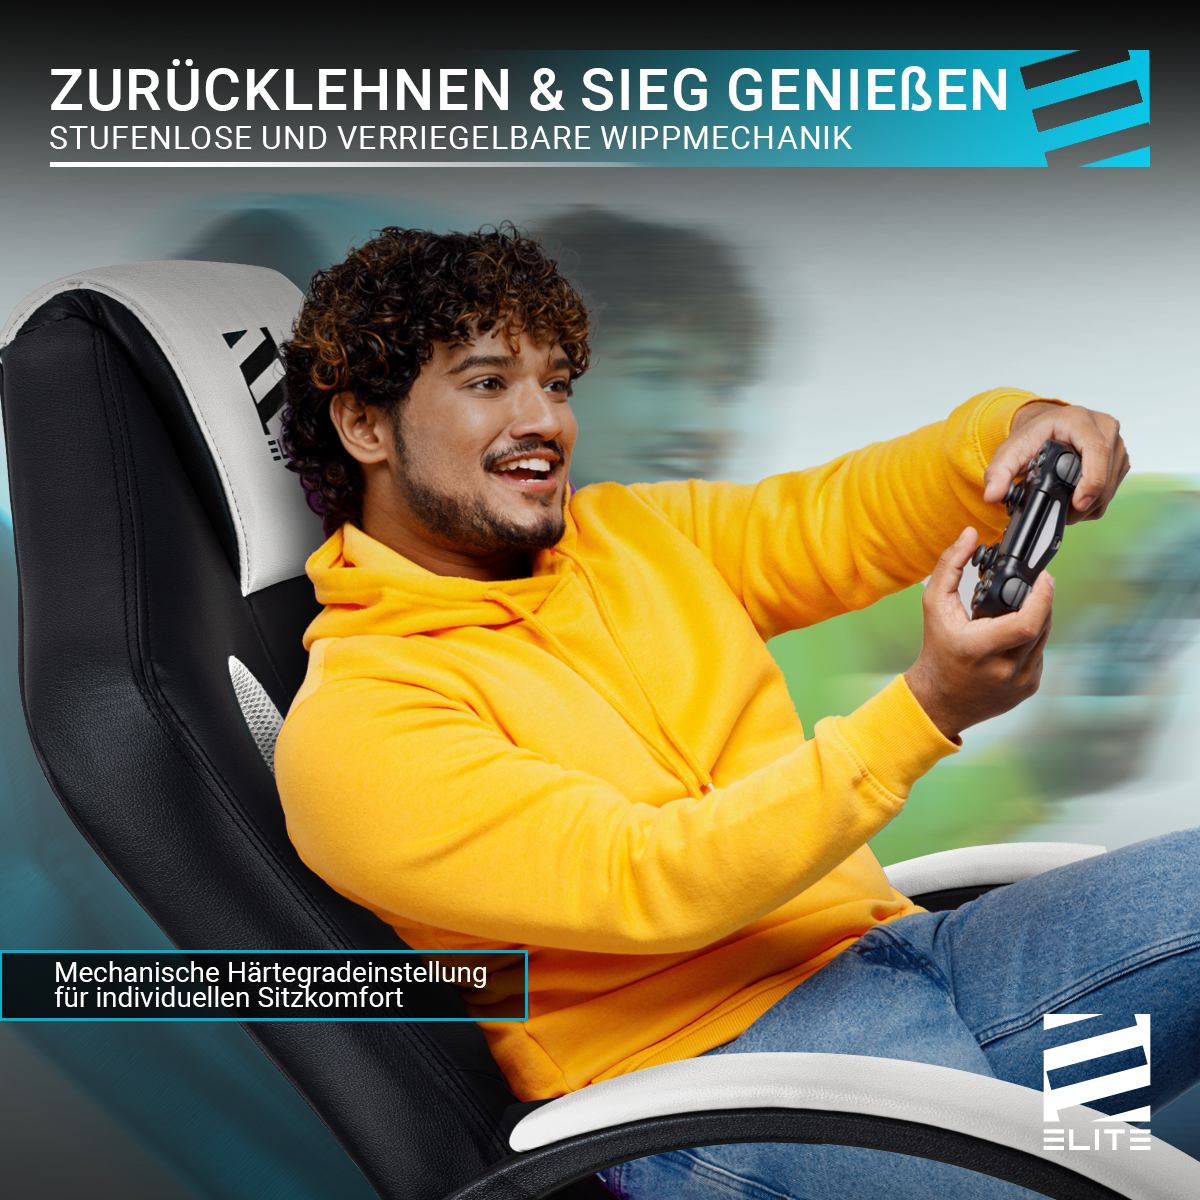 Gaming Wippmechanik, MG100 Memory-Schaum, extra hohe Stuhl, Weiß/Schwarz EXODUS, Rückenlehne, Armpolster, ELITE